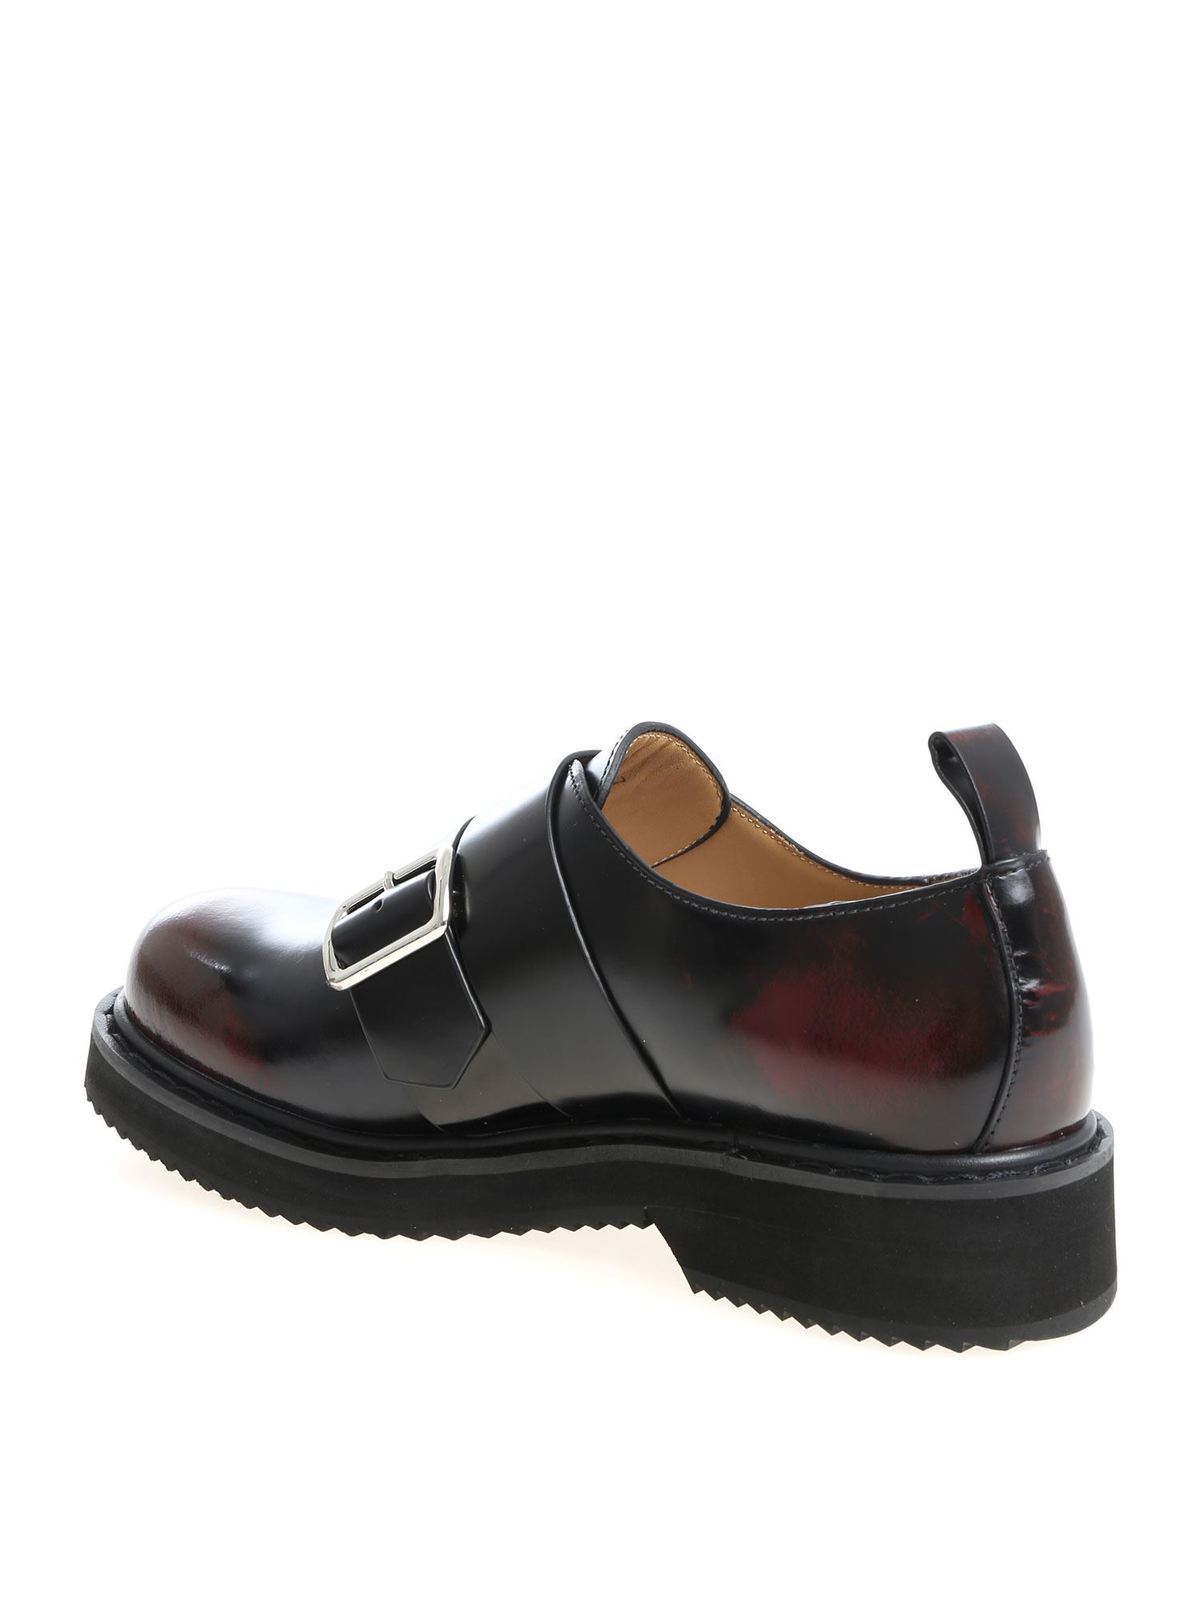 Lace-ups shoes Jil Sander Navy - Black shoes with straps - JN31060A374